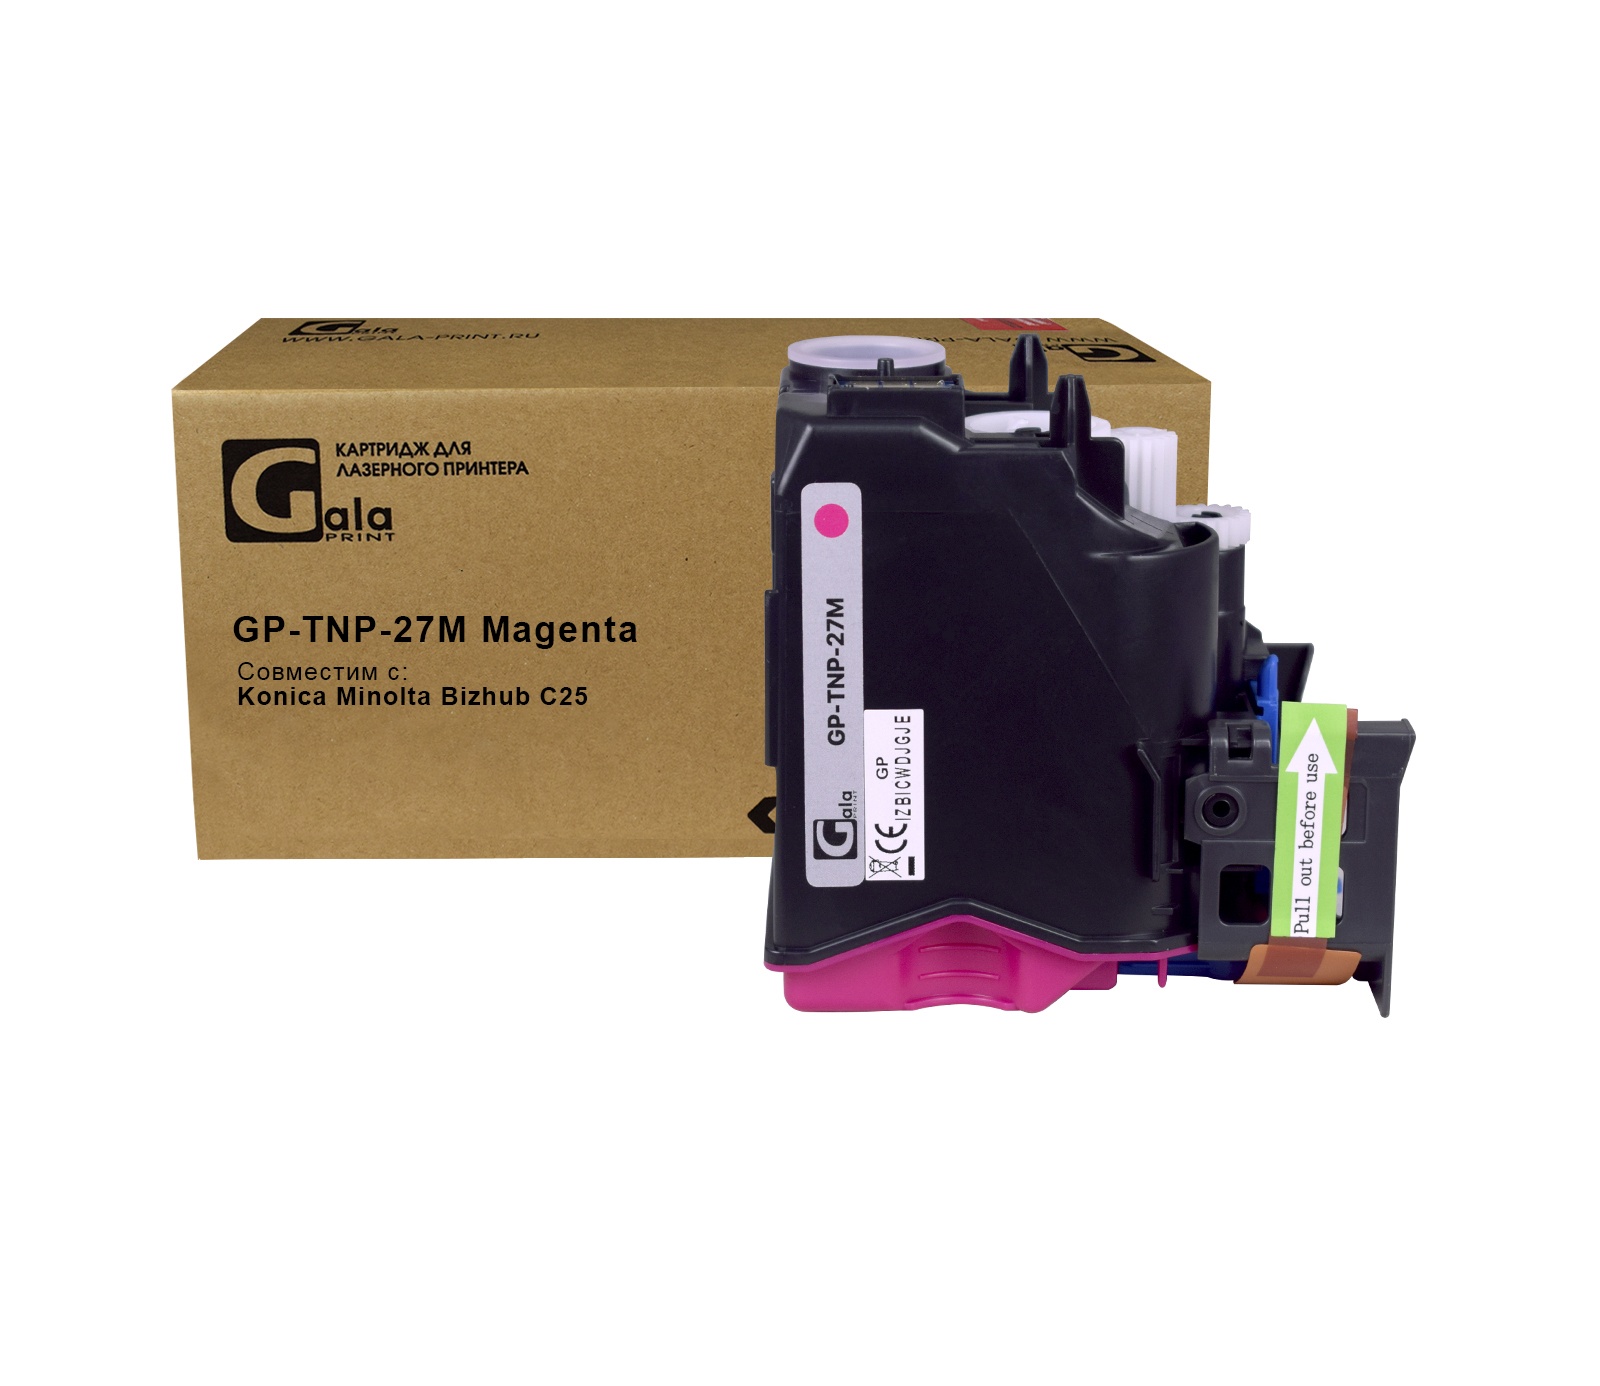 Картридж GP-TNP-27M для принтеров Konica Minolta Bizhub C25 Magenta 6000 копий GalaPrint